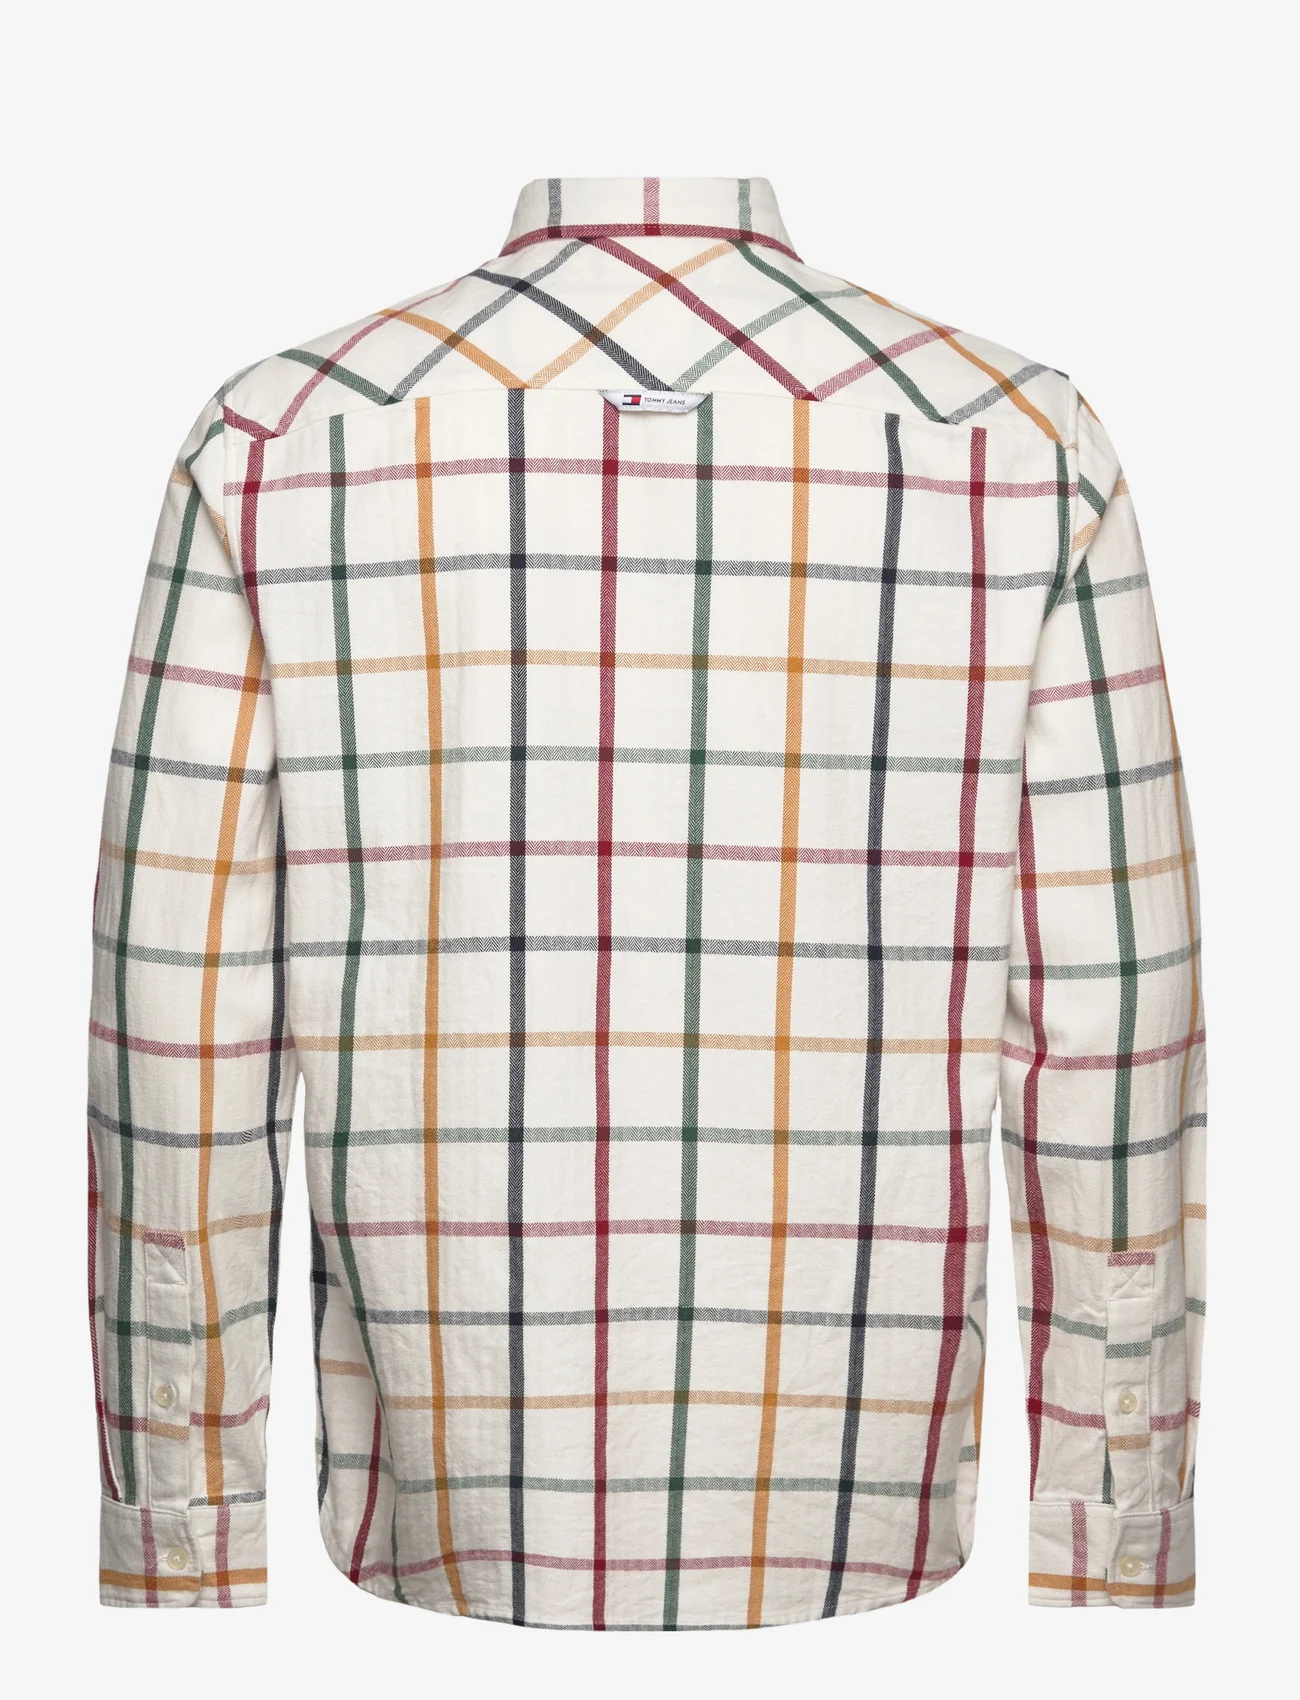 Tommy Jeans - TJM REG CHECK FLANNEL SHIRT - geruite overhemden - white check - 1